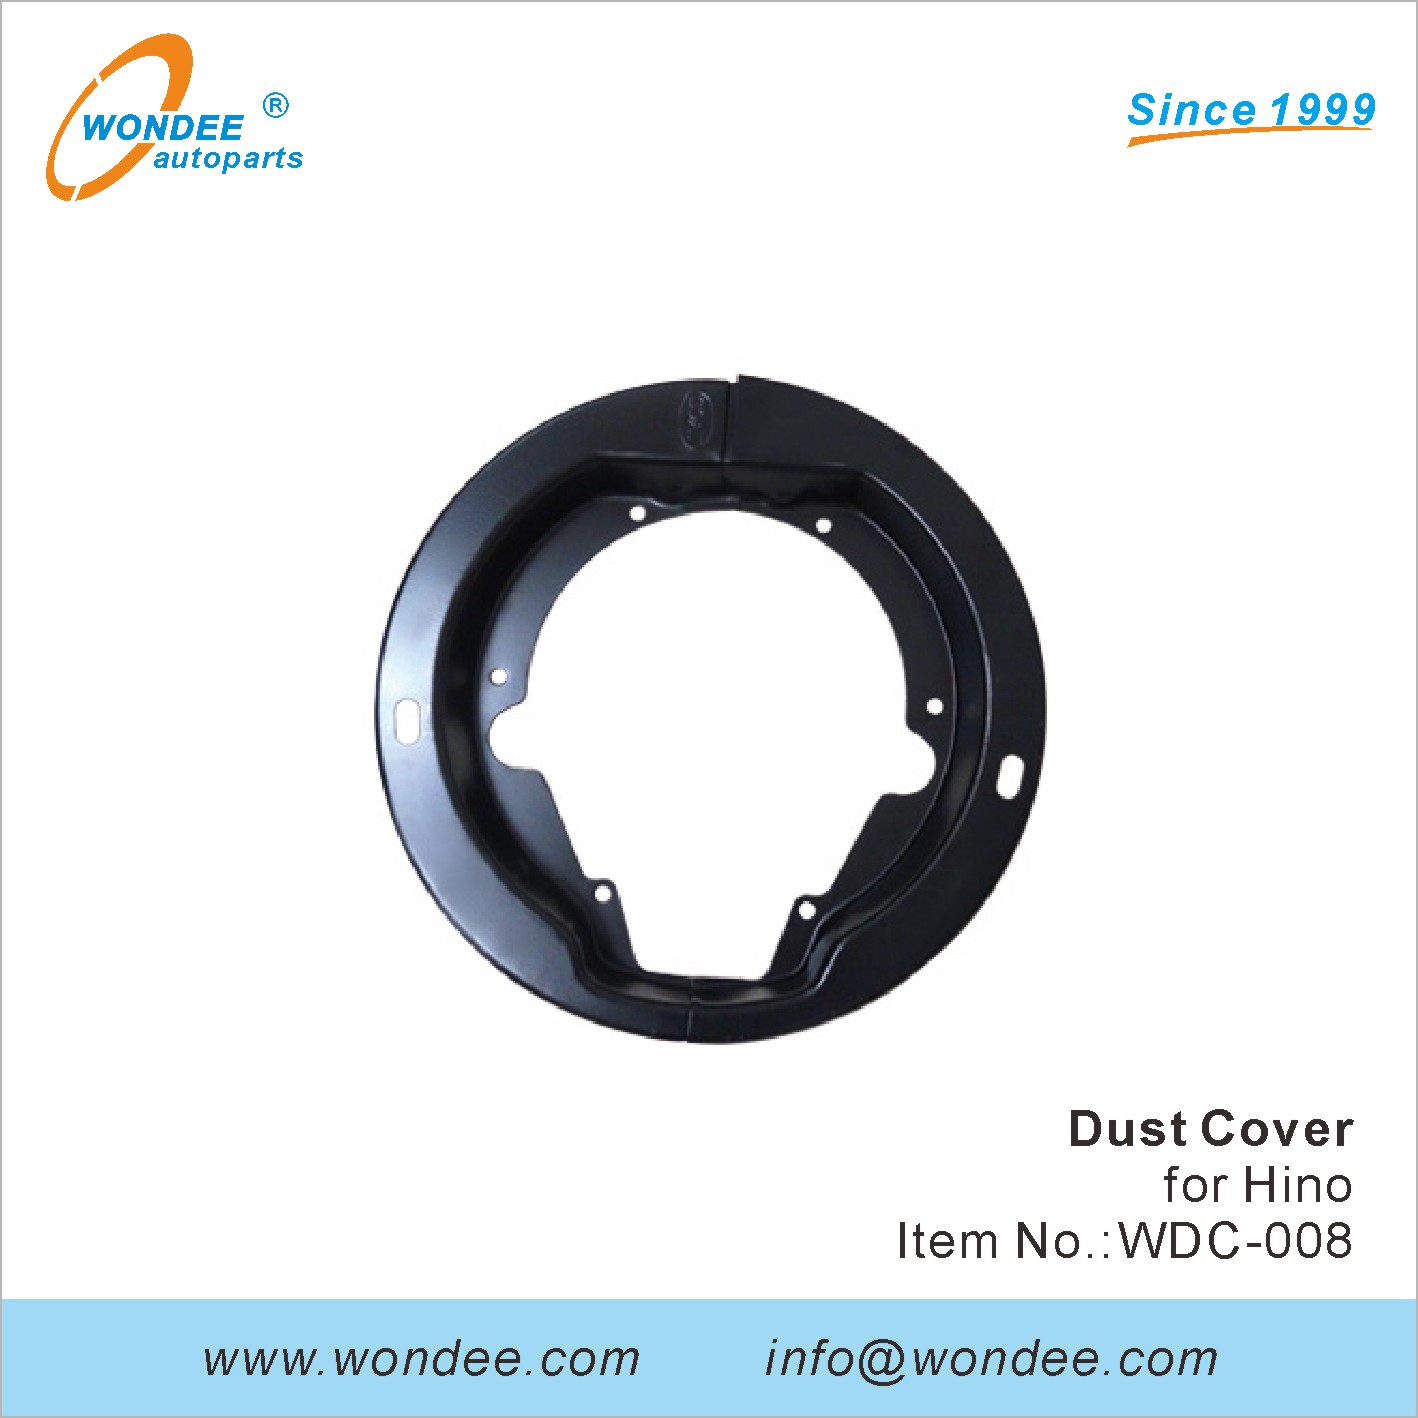 WONDEE dust cover (8)